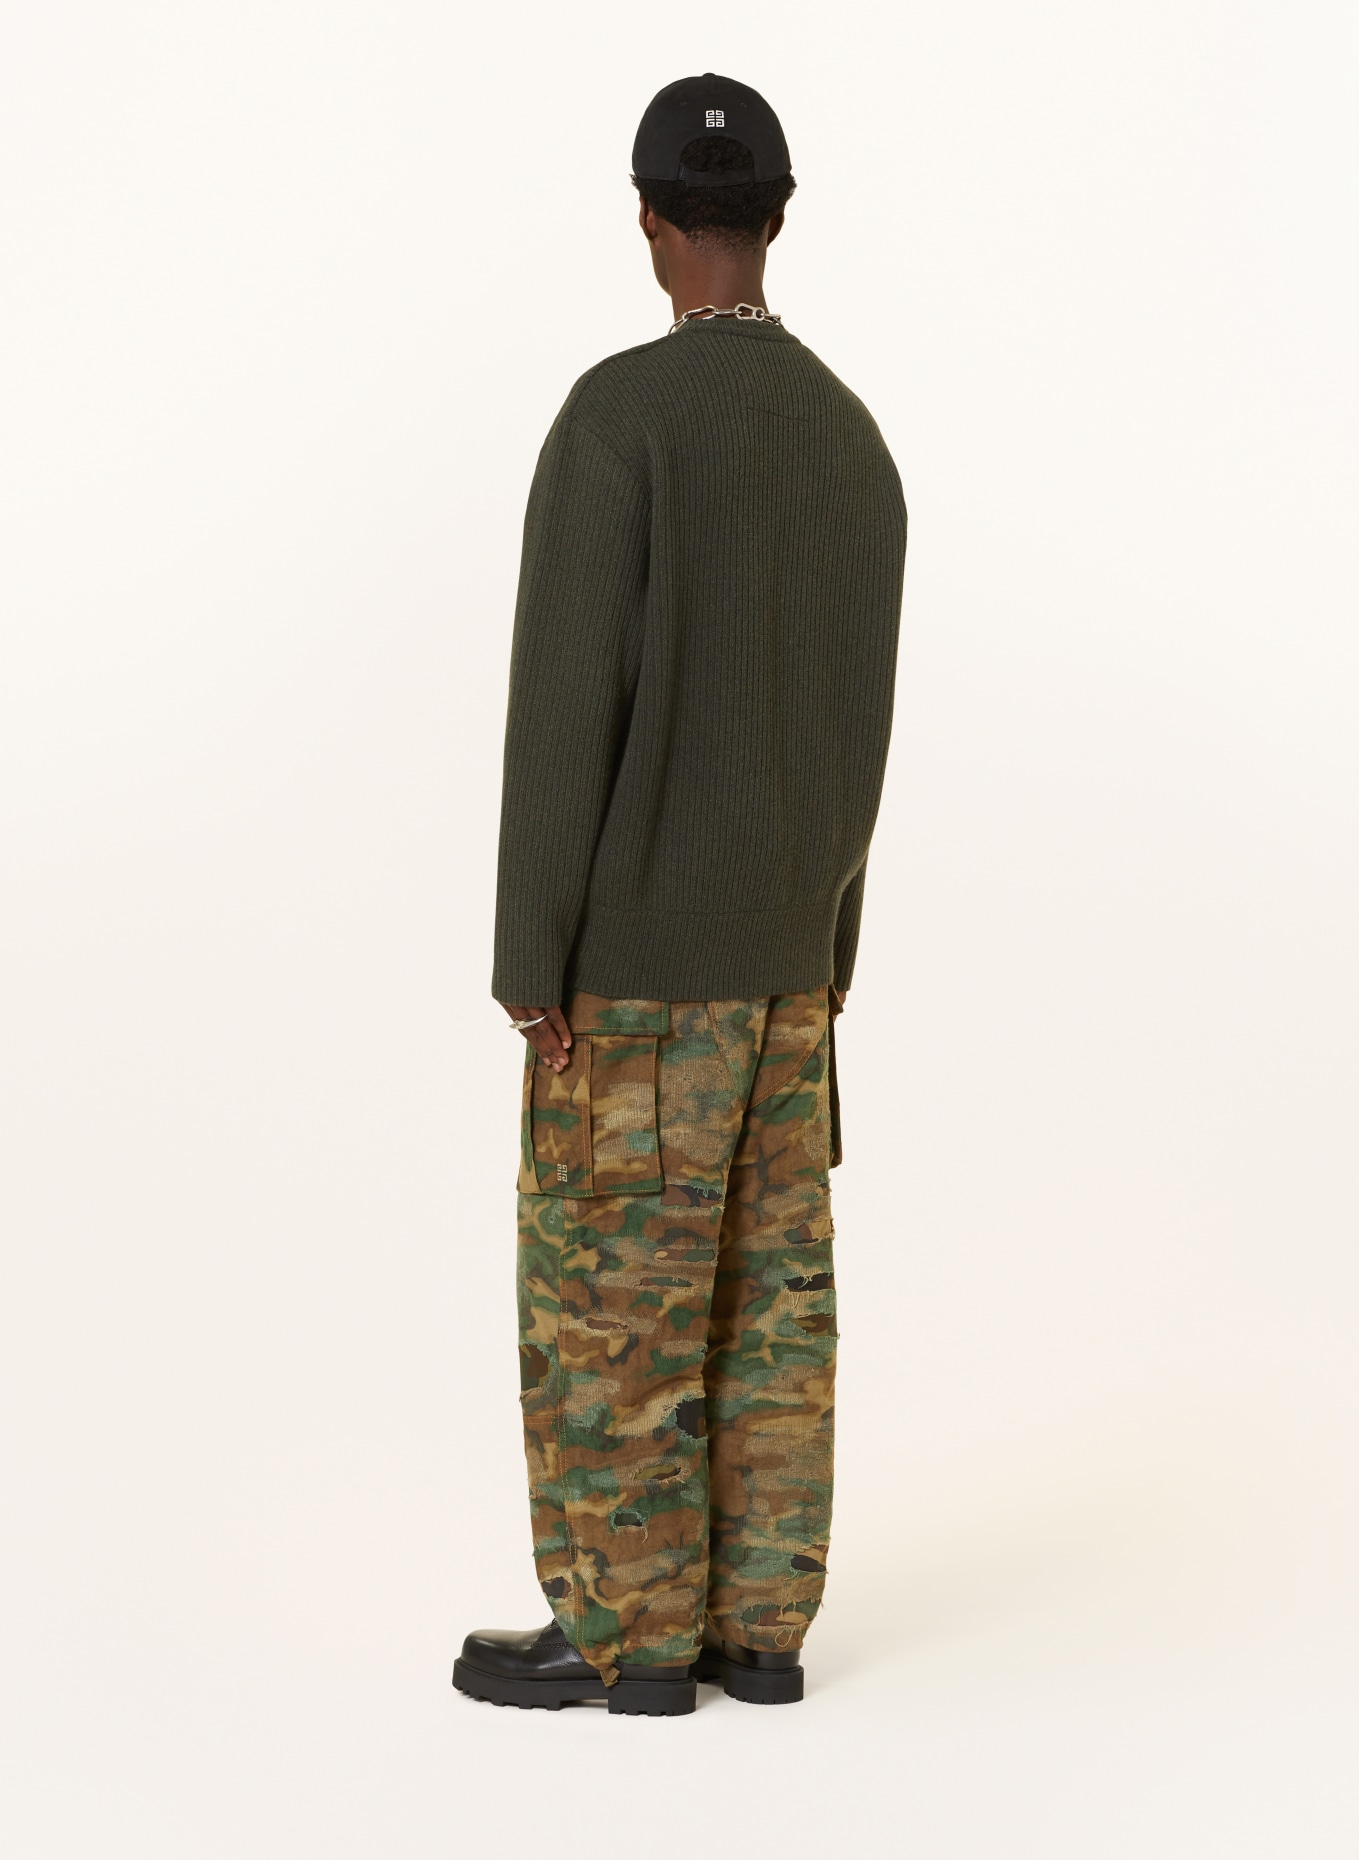 Givenchy designs high-fashion cargo pants